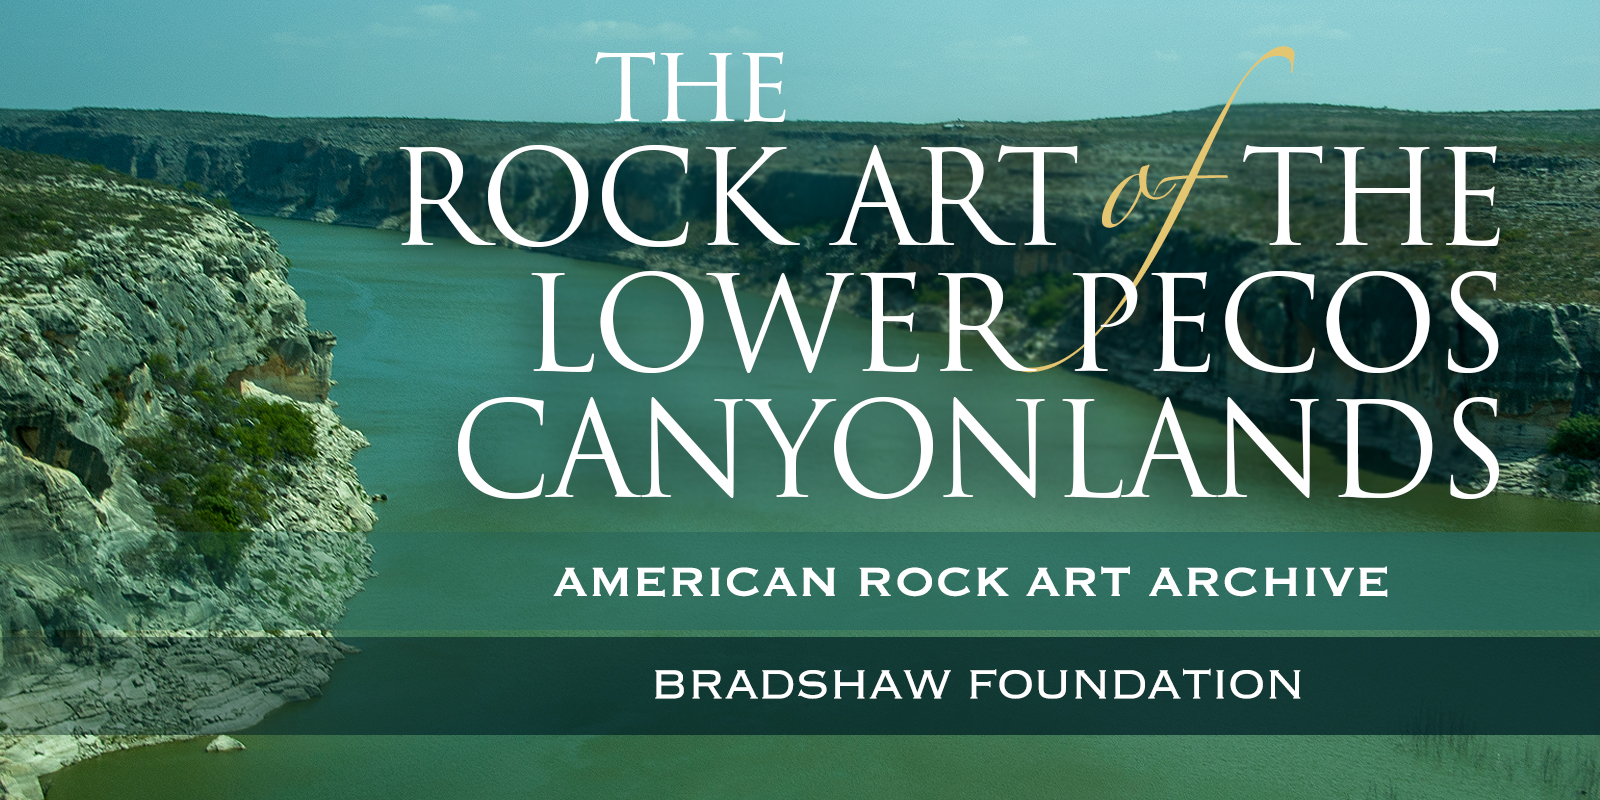 American Rock Art Archive Bradshaw Foundation United States America USA